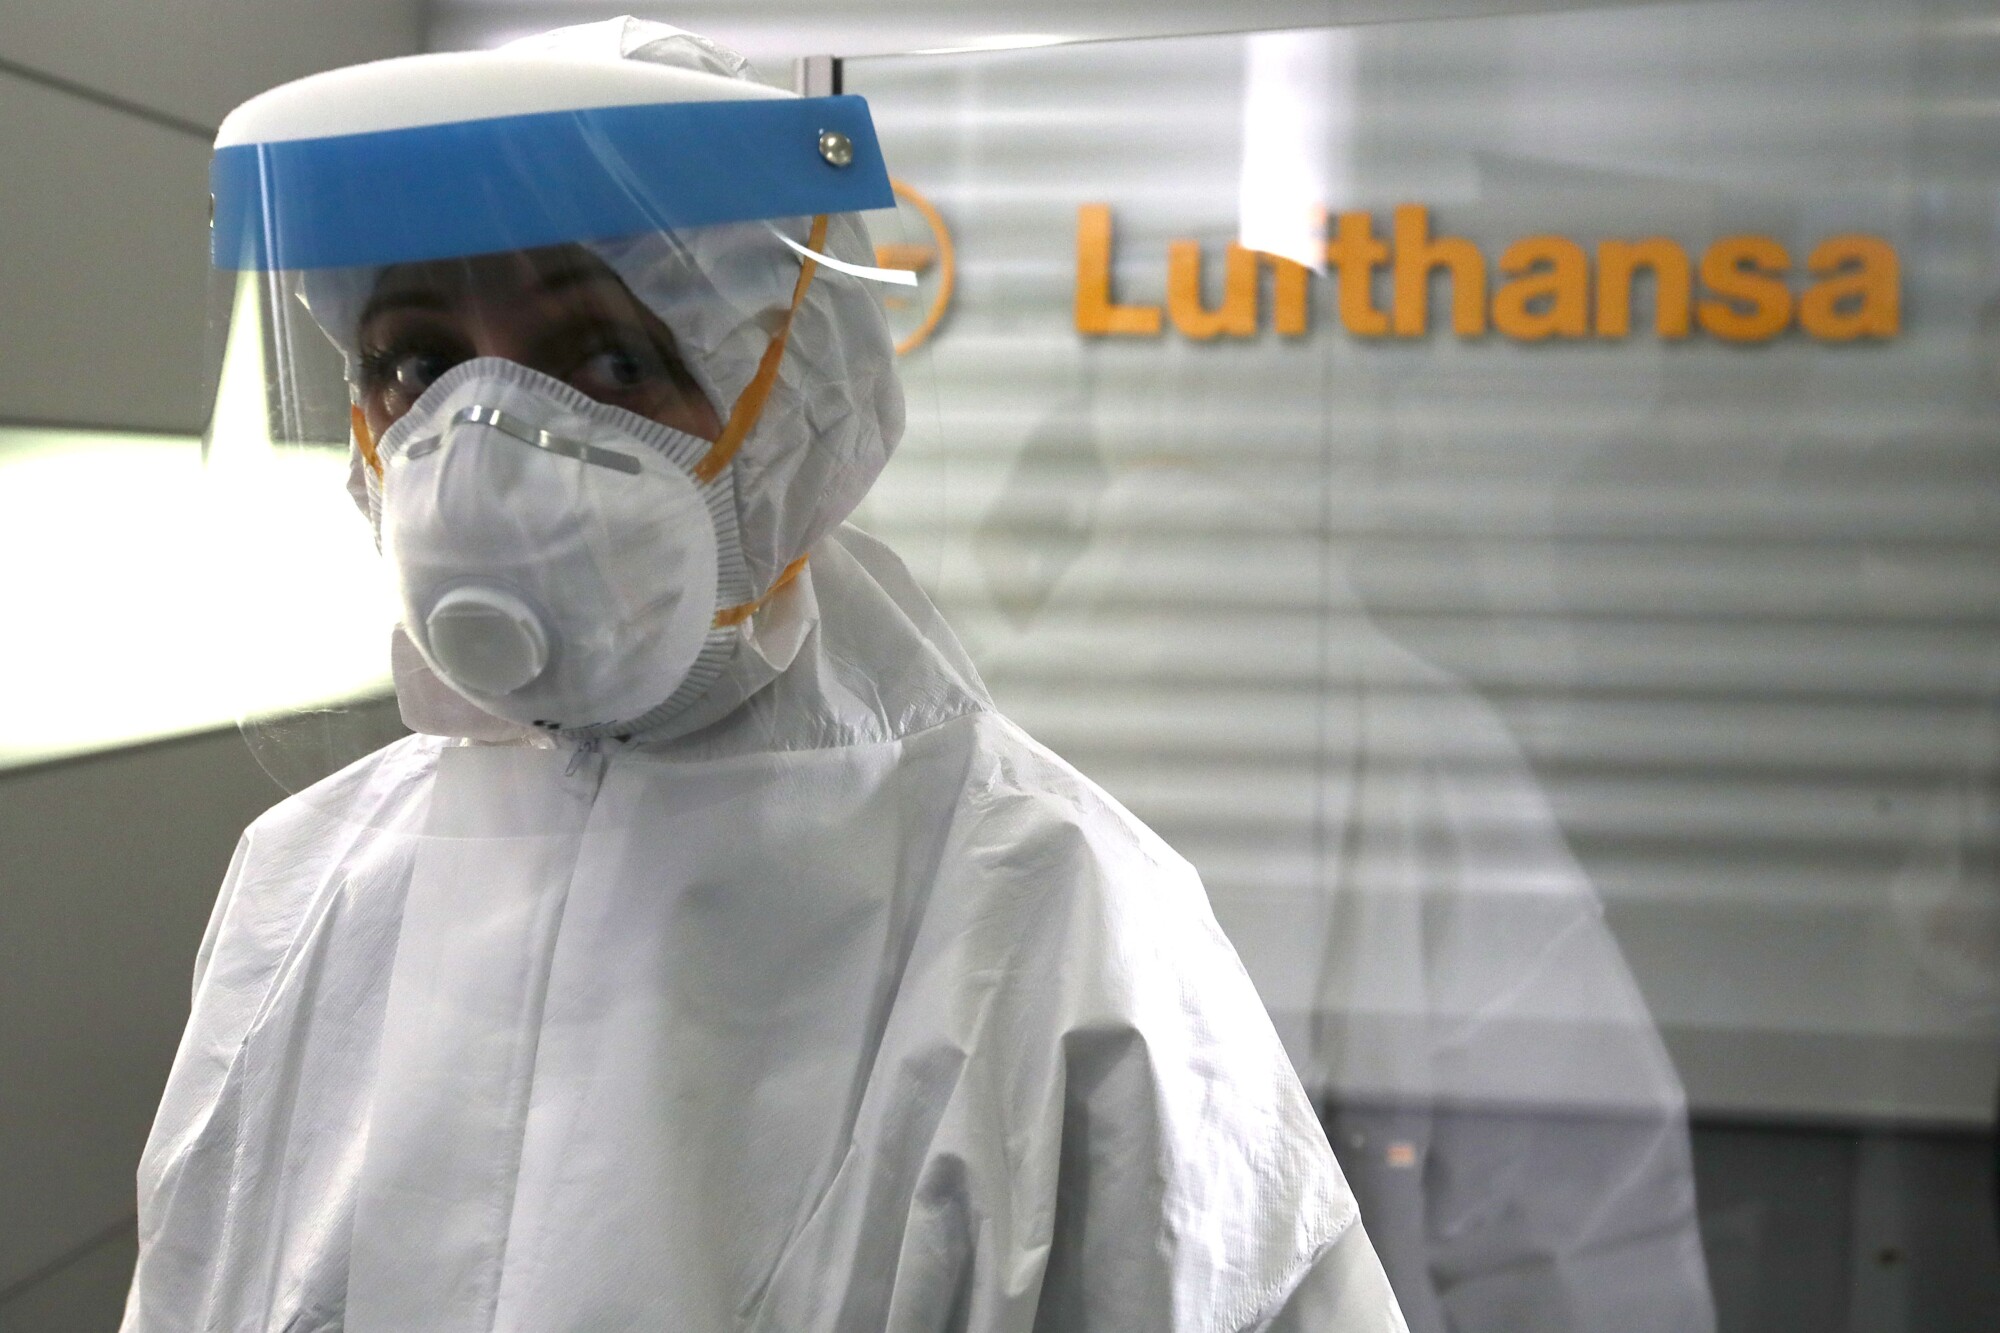 Lufthansa Raises 1.6 Billion Euros to Repay German Government Aid